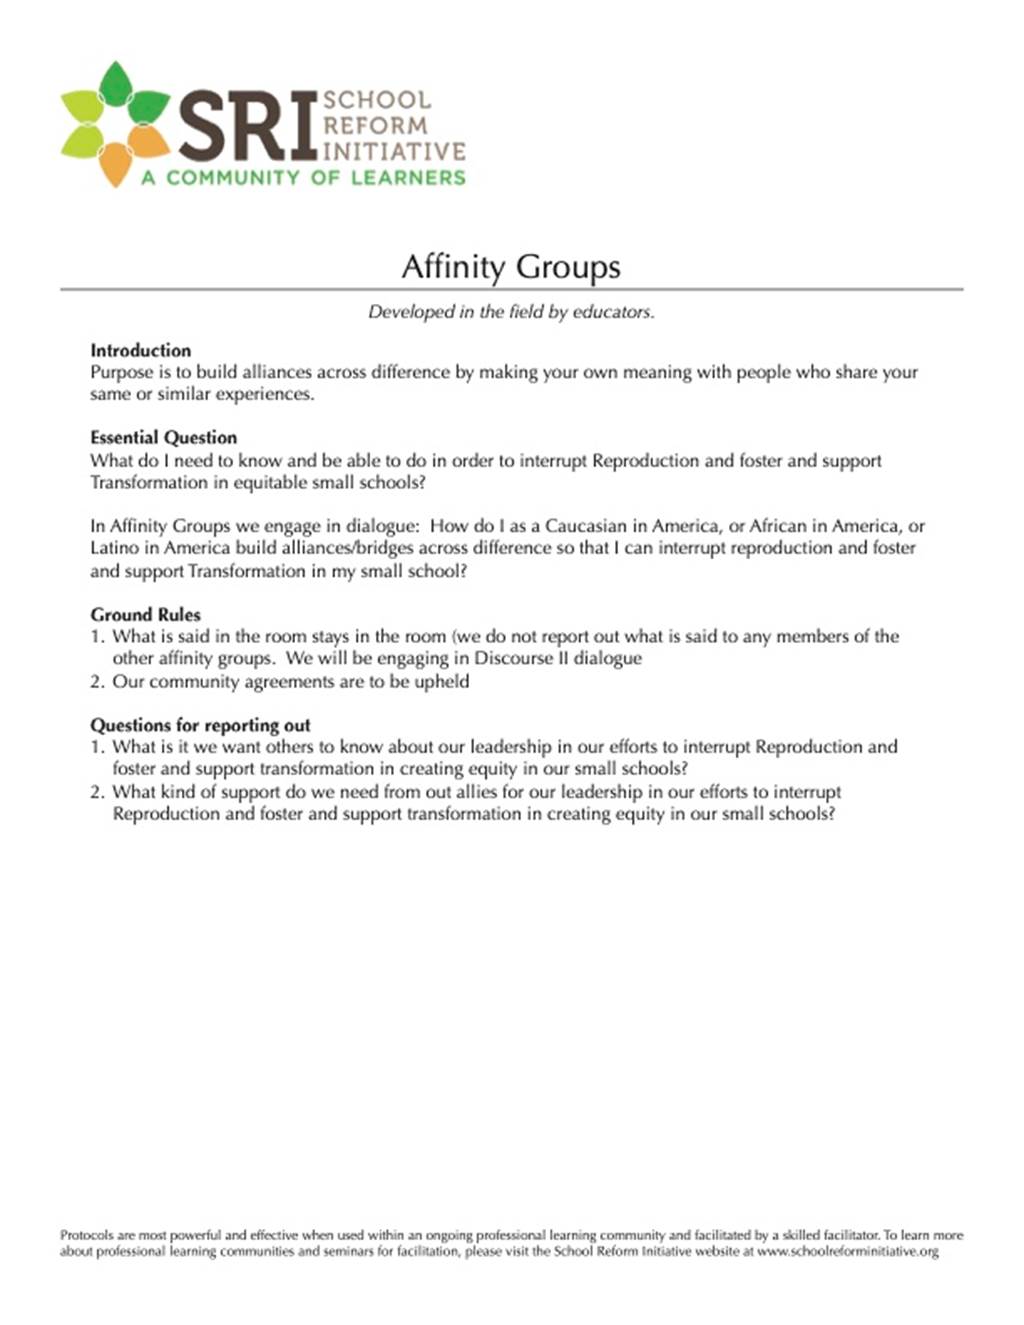 Affinity Groups - Document image